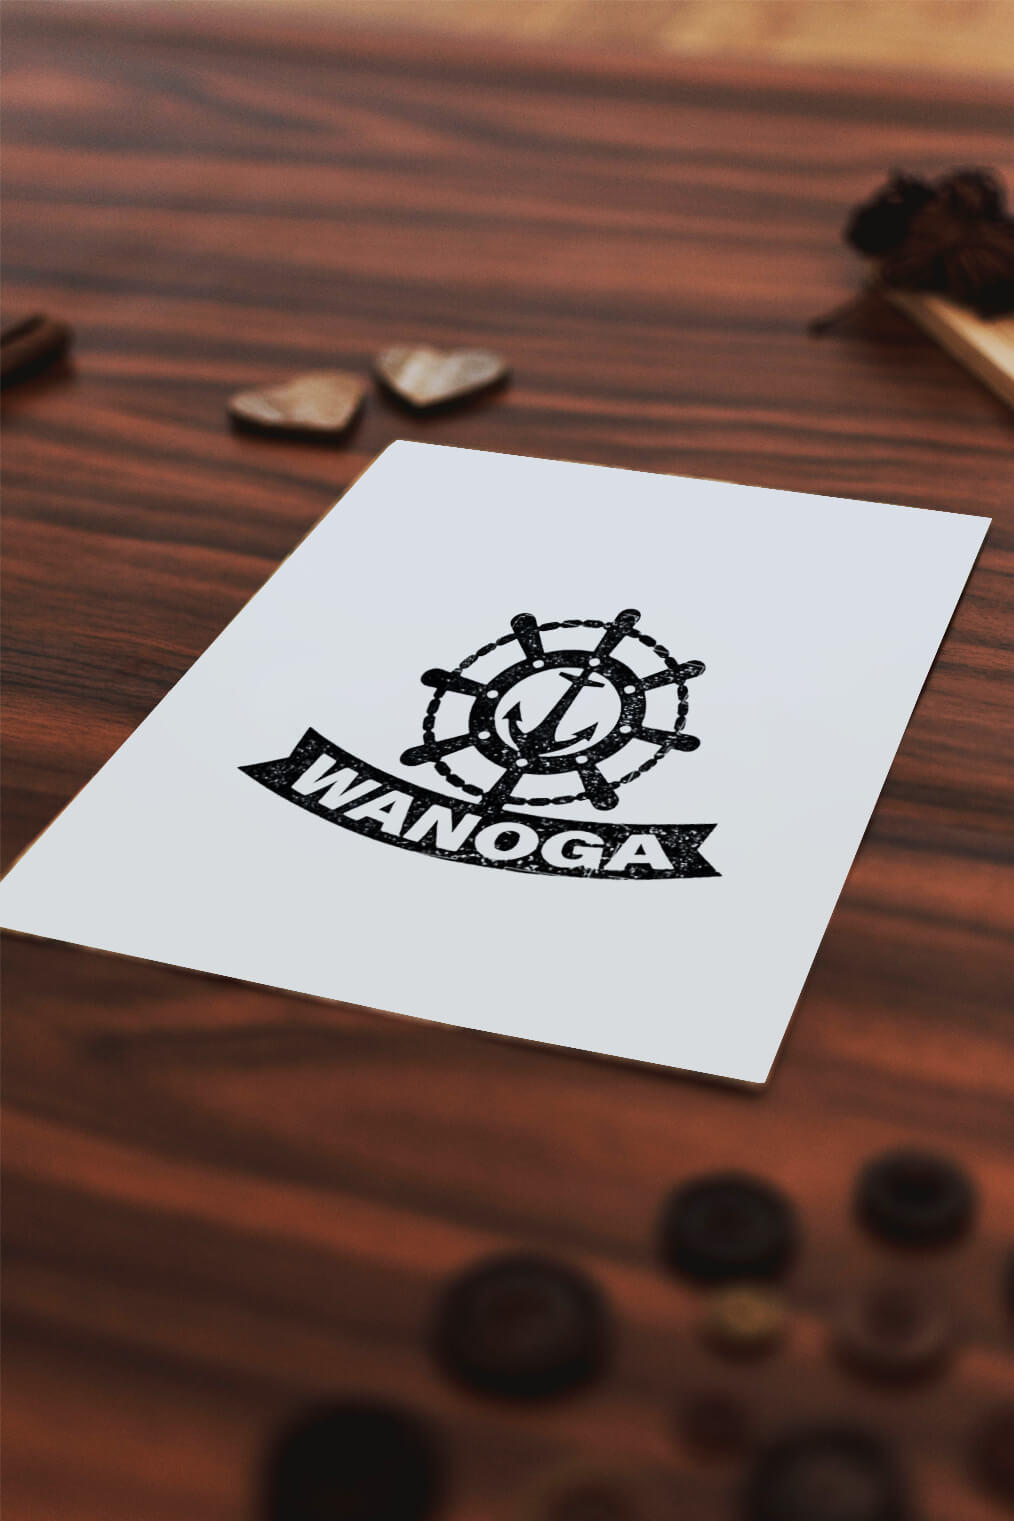 Stempel z logo wanoga